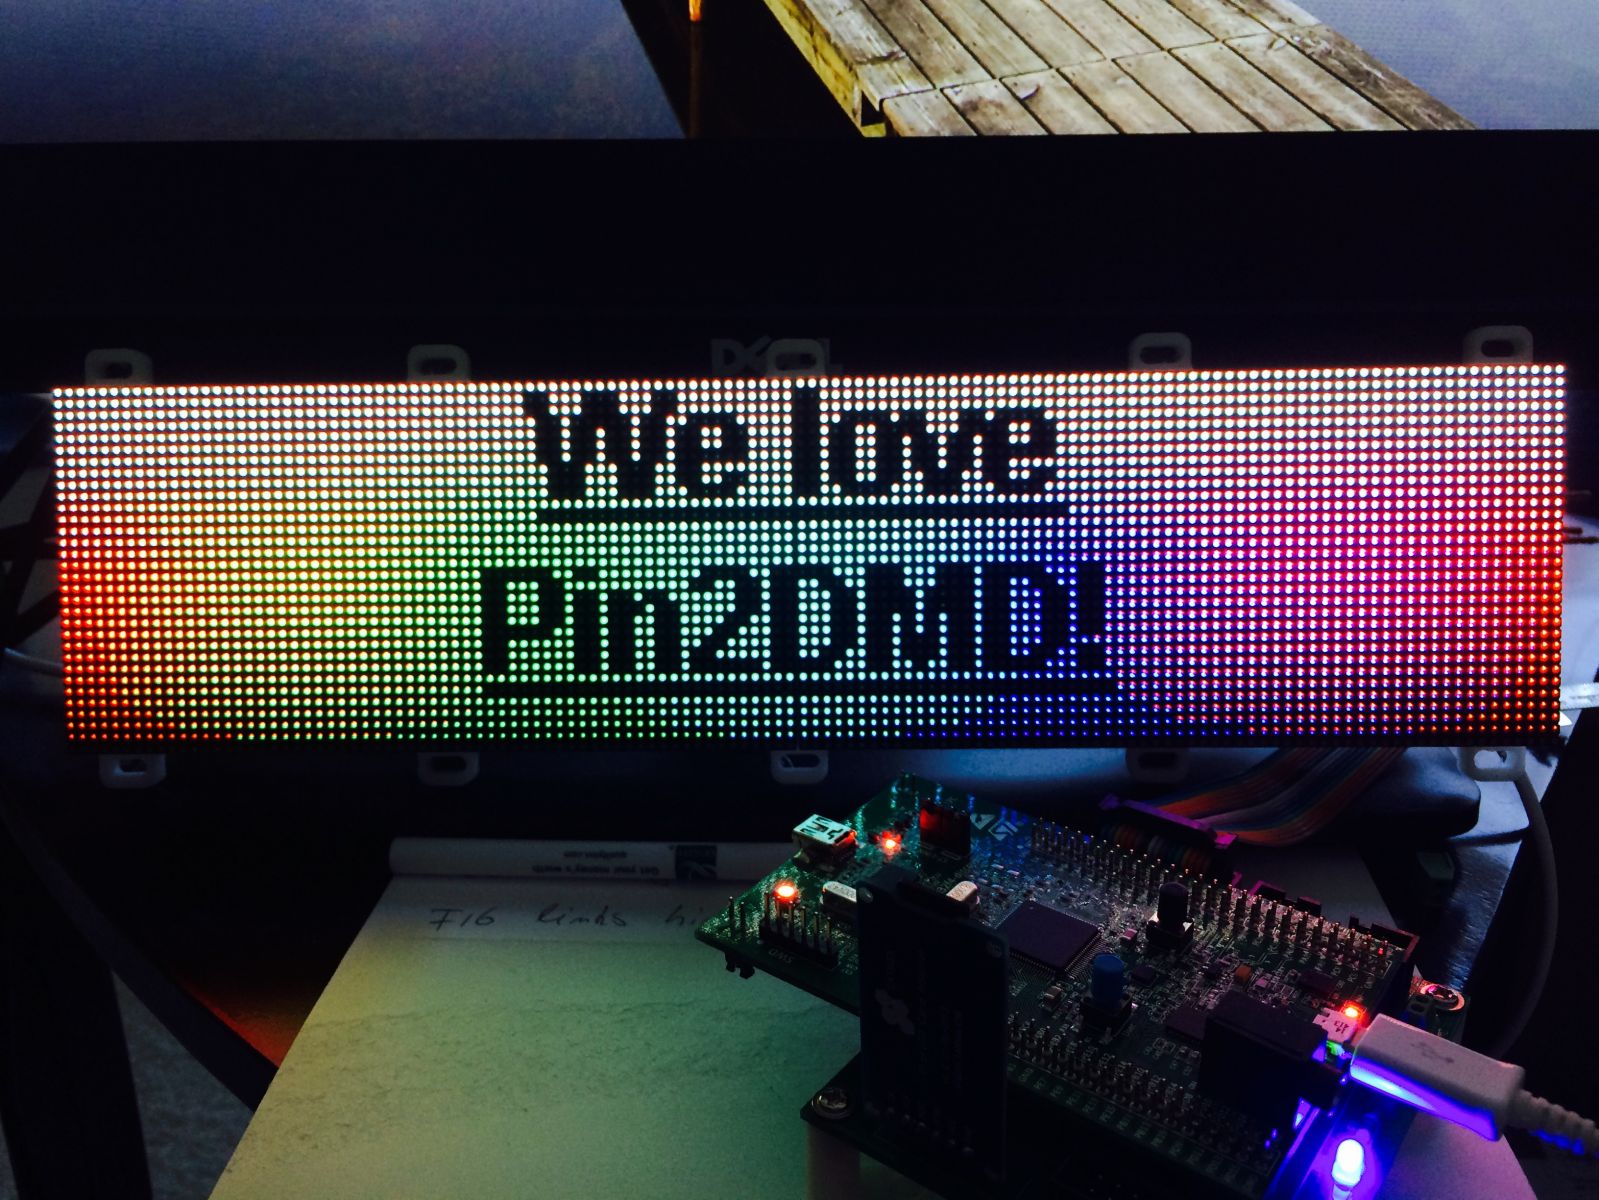 We love Pin2DMD